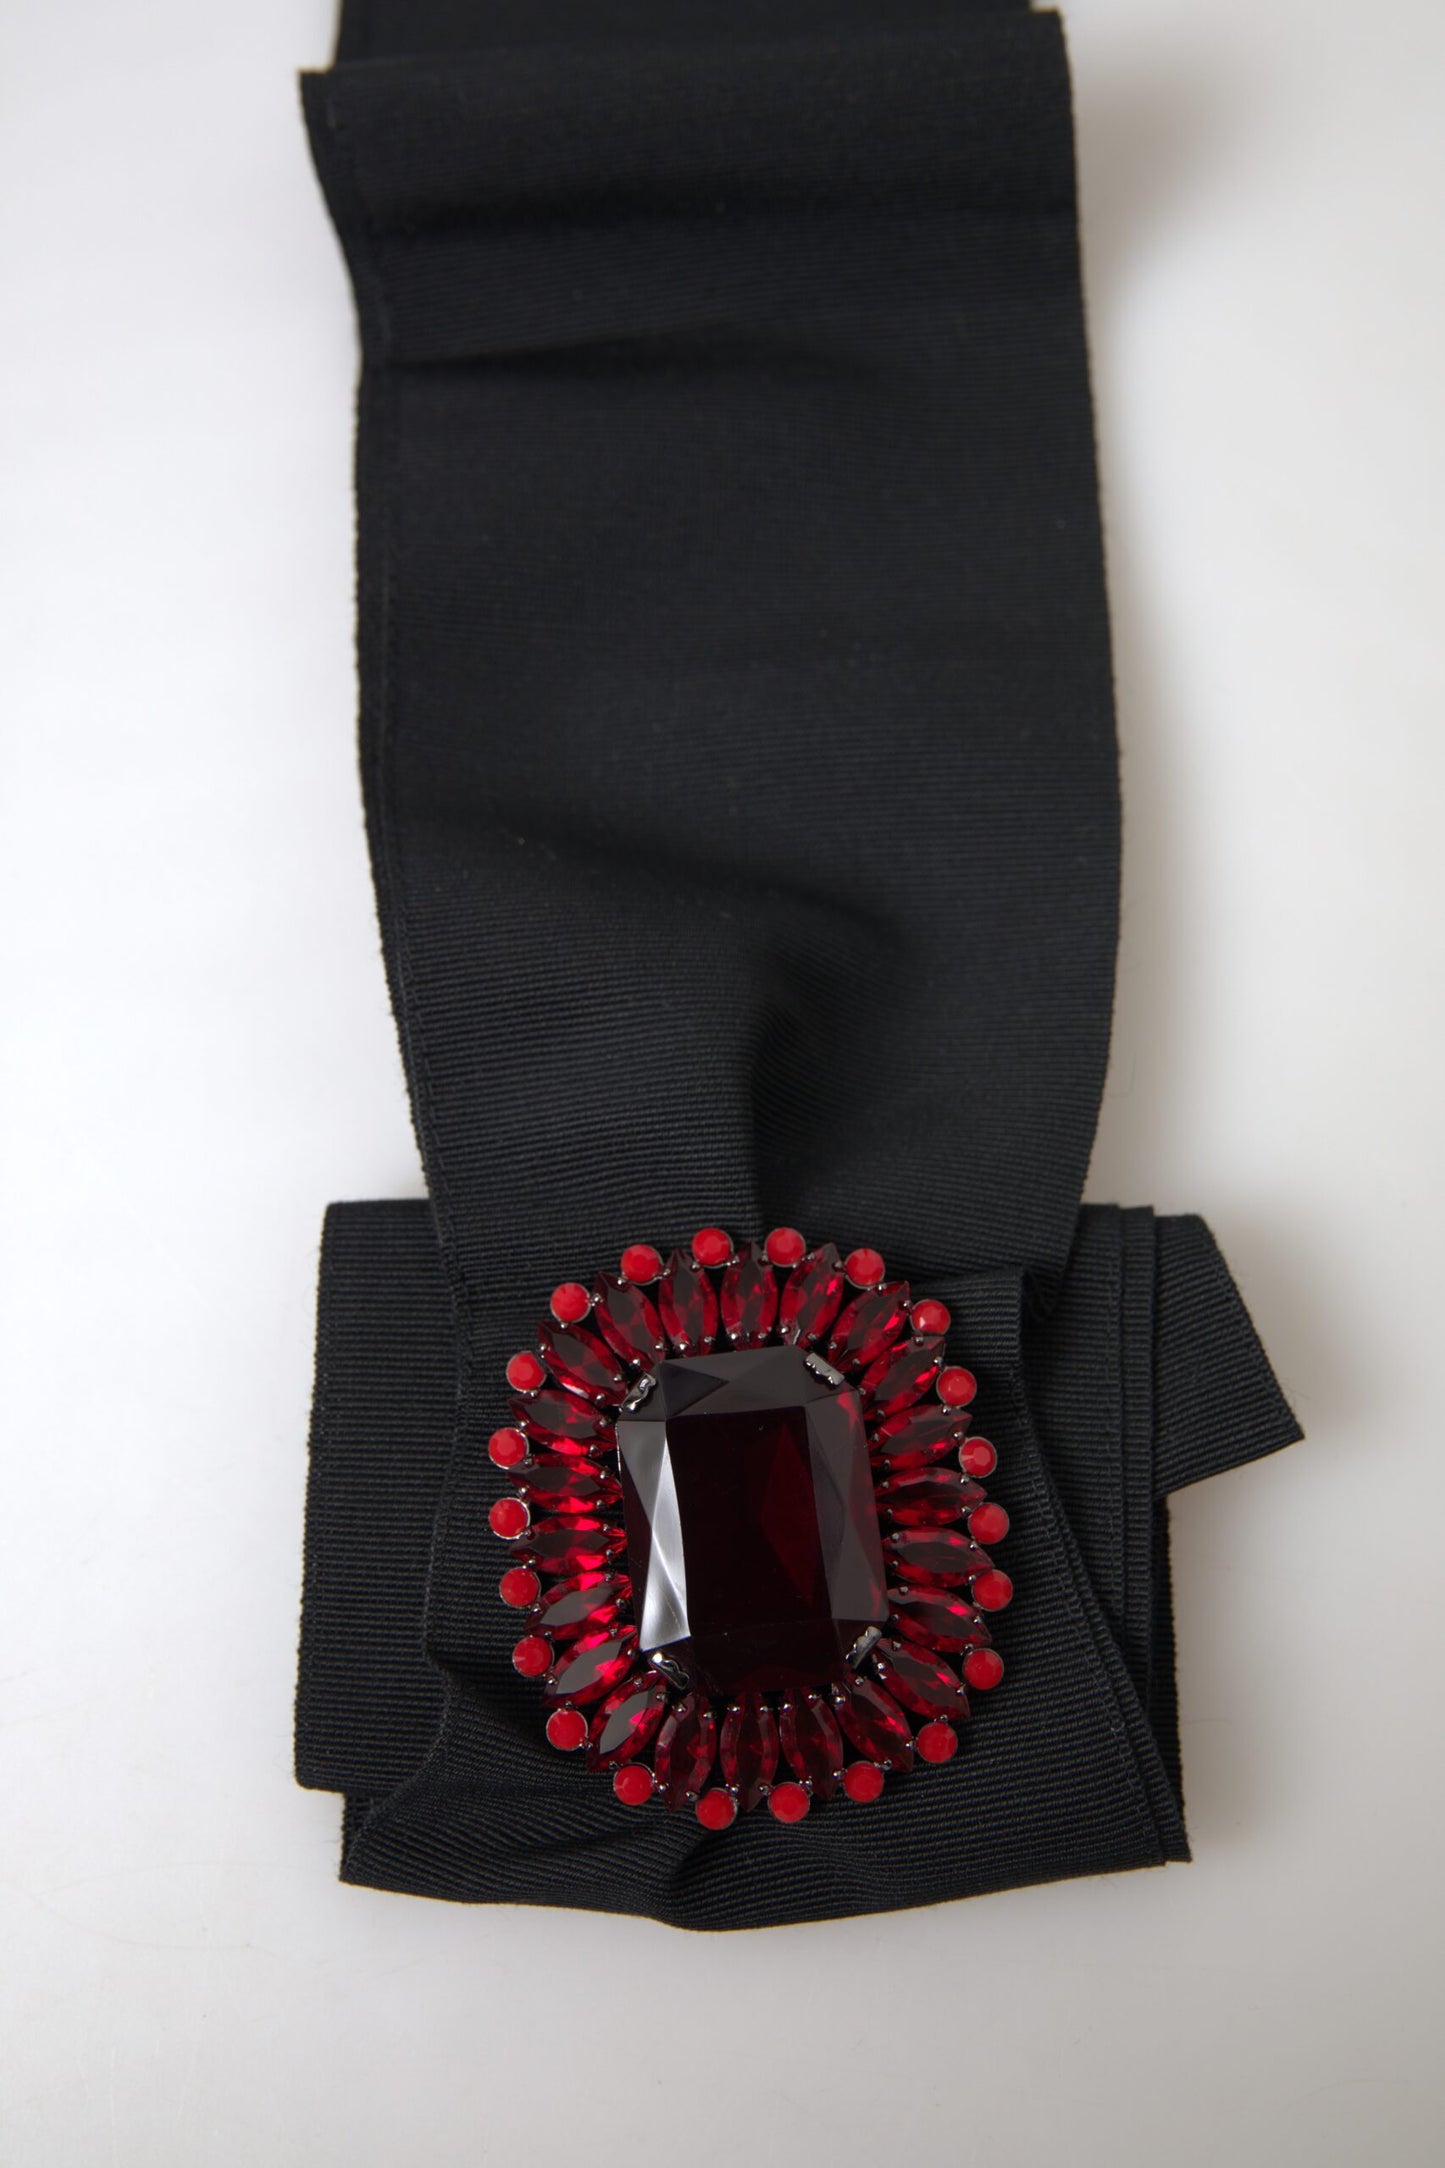 Dolce &amp; Gabbana Black Crystal Brass Wide Waist Runway Belt